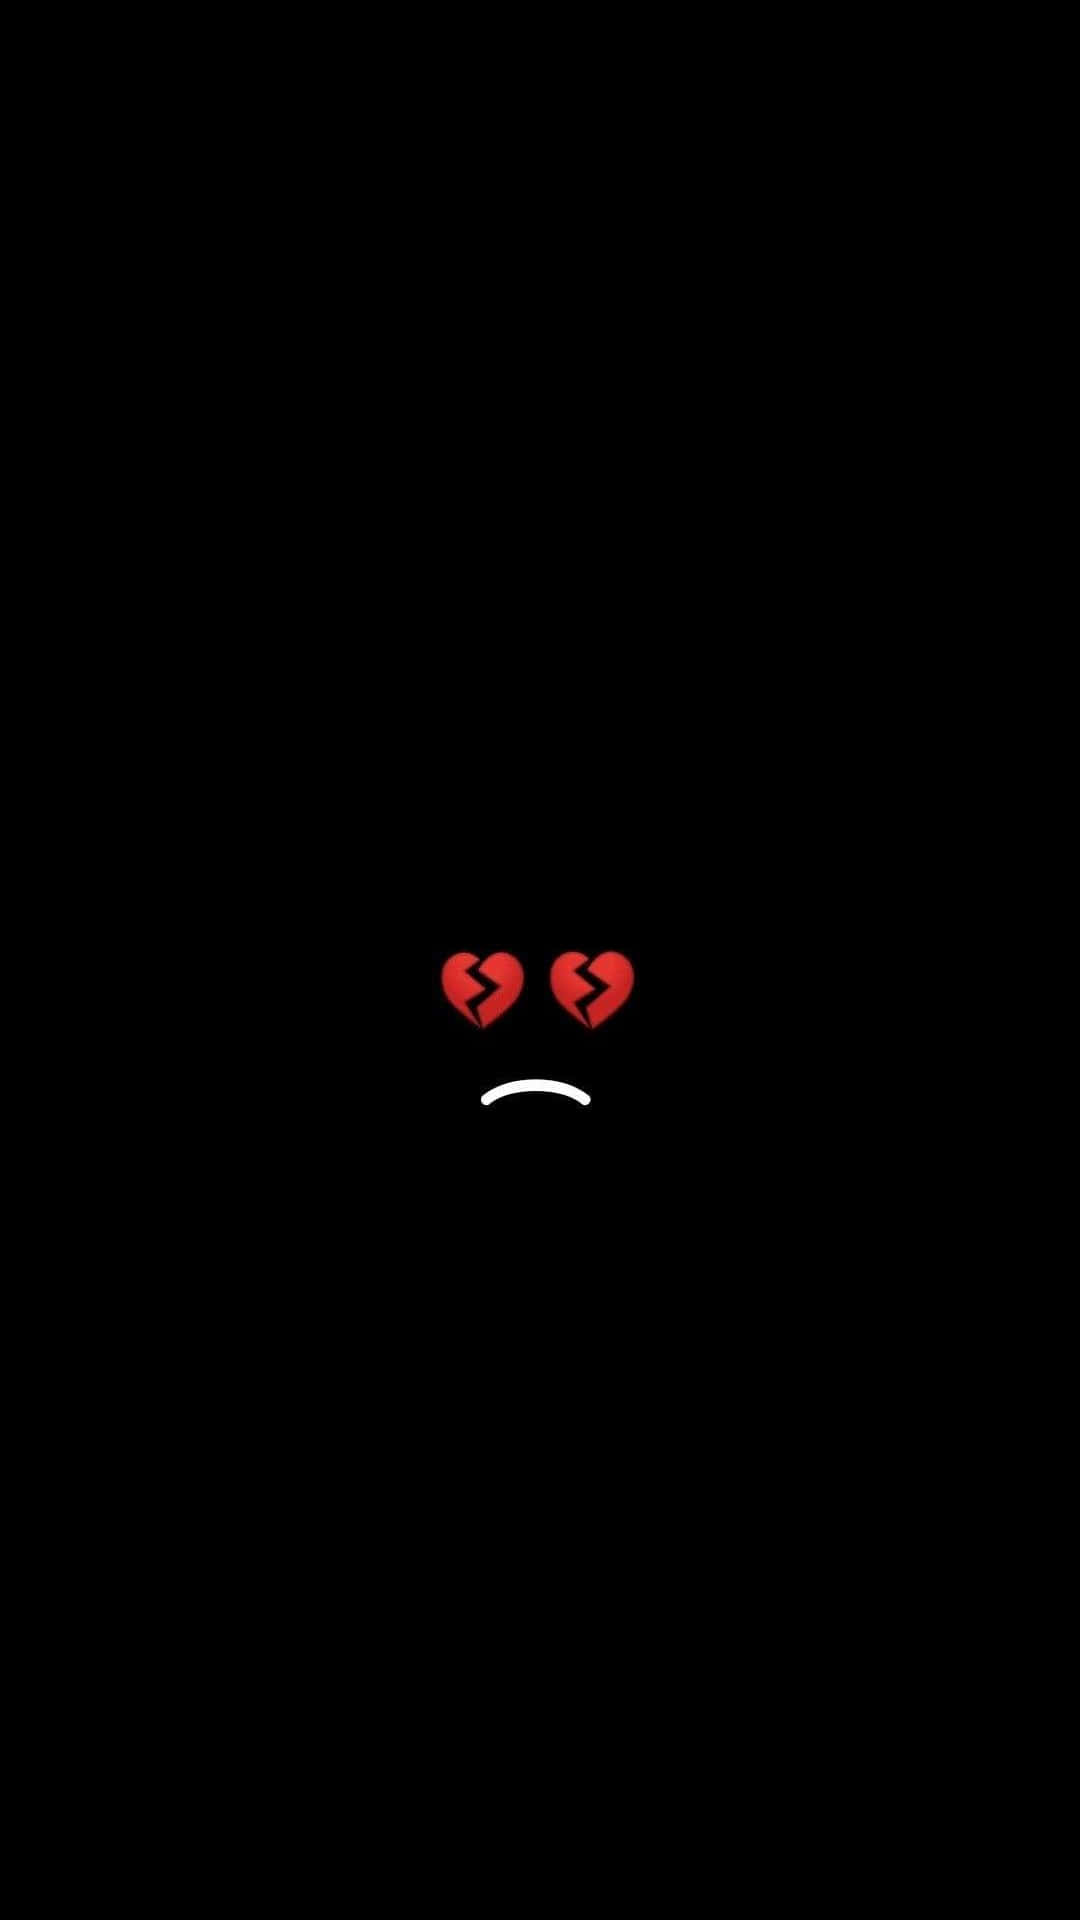 Download Depressing Sad Emoji Iphone Wallpaper | Wallpapers.com